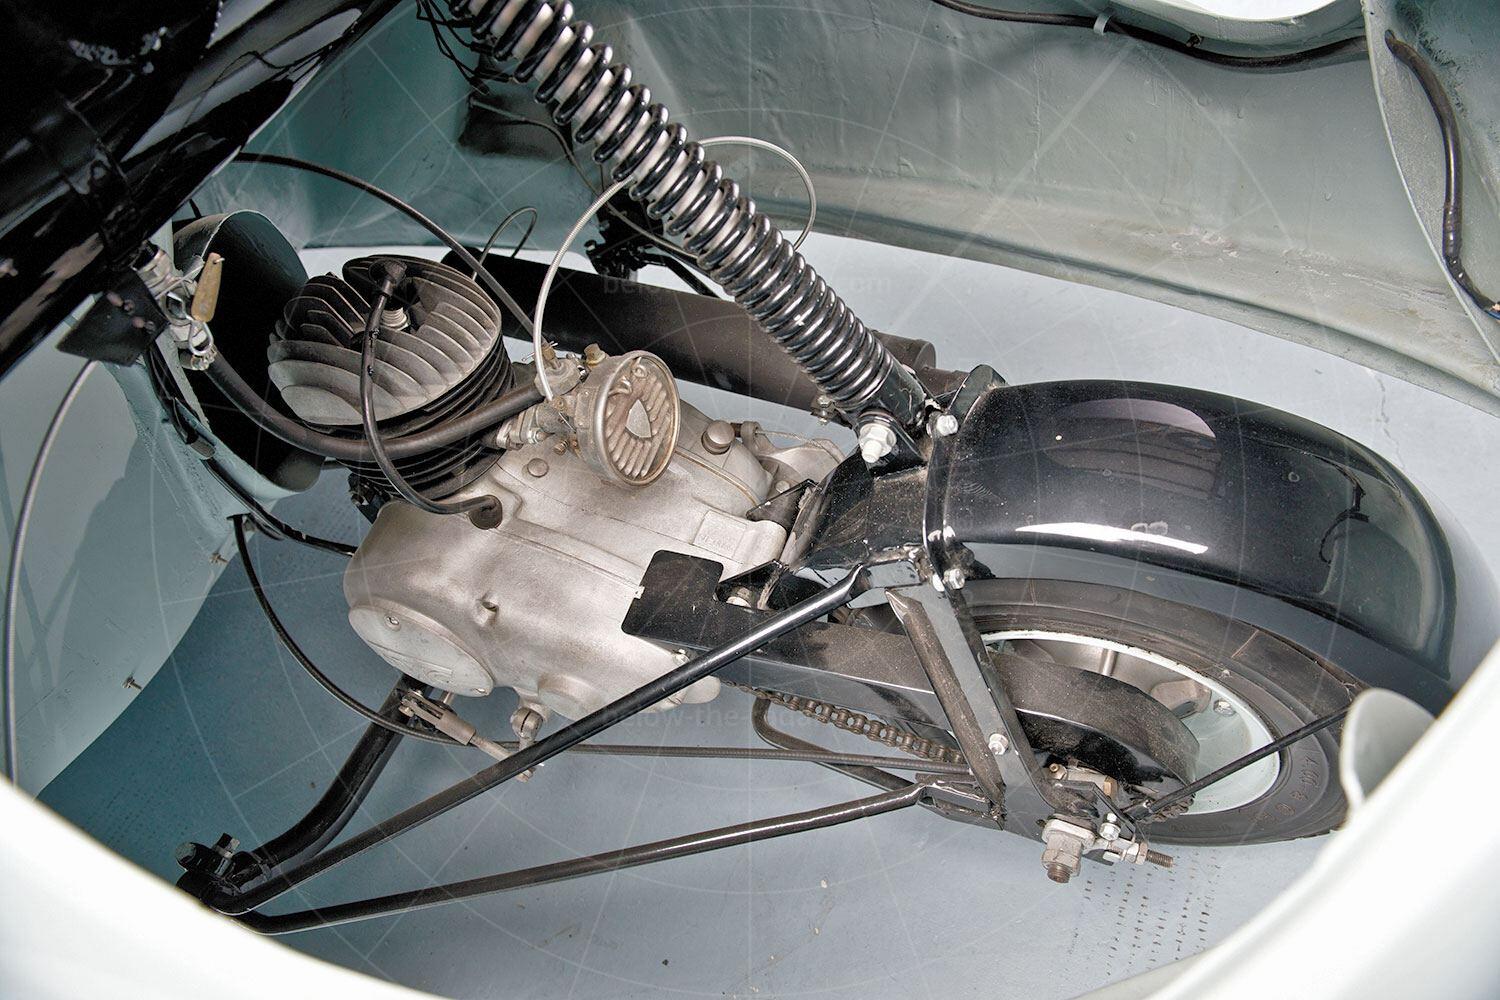 The Fuji Cabin's engine and rear suspension Pic: RM Sotheby's | The Fuji Cabin's engine and rear suspension